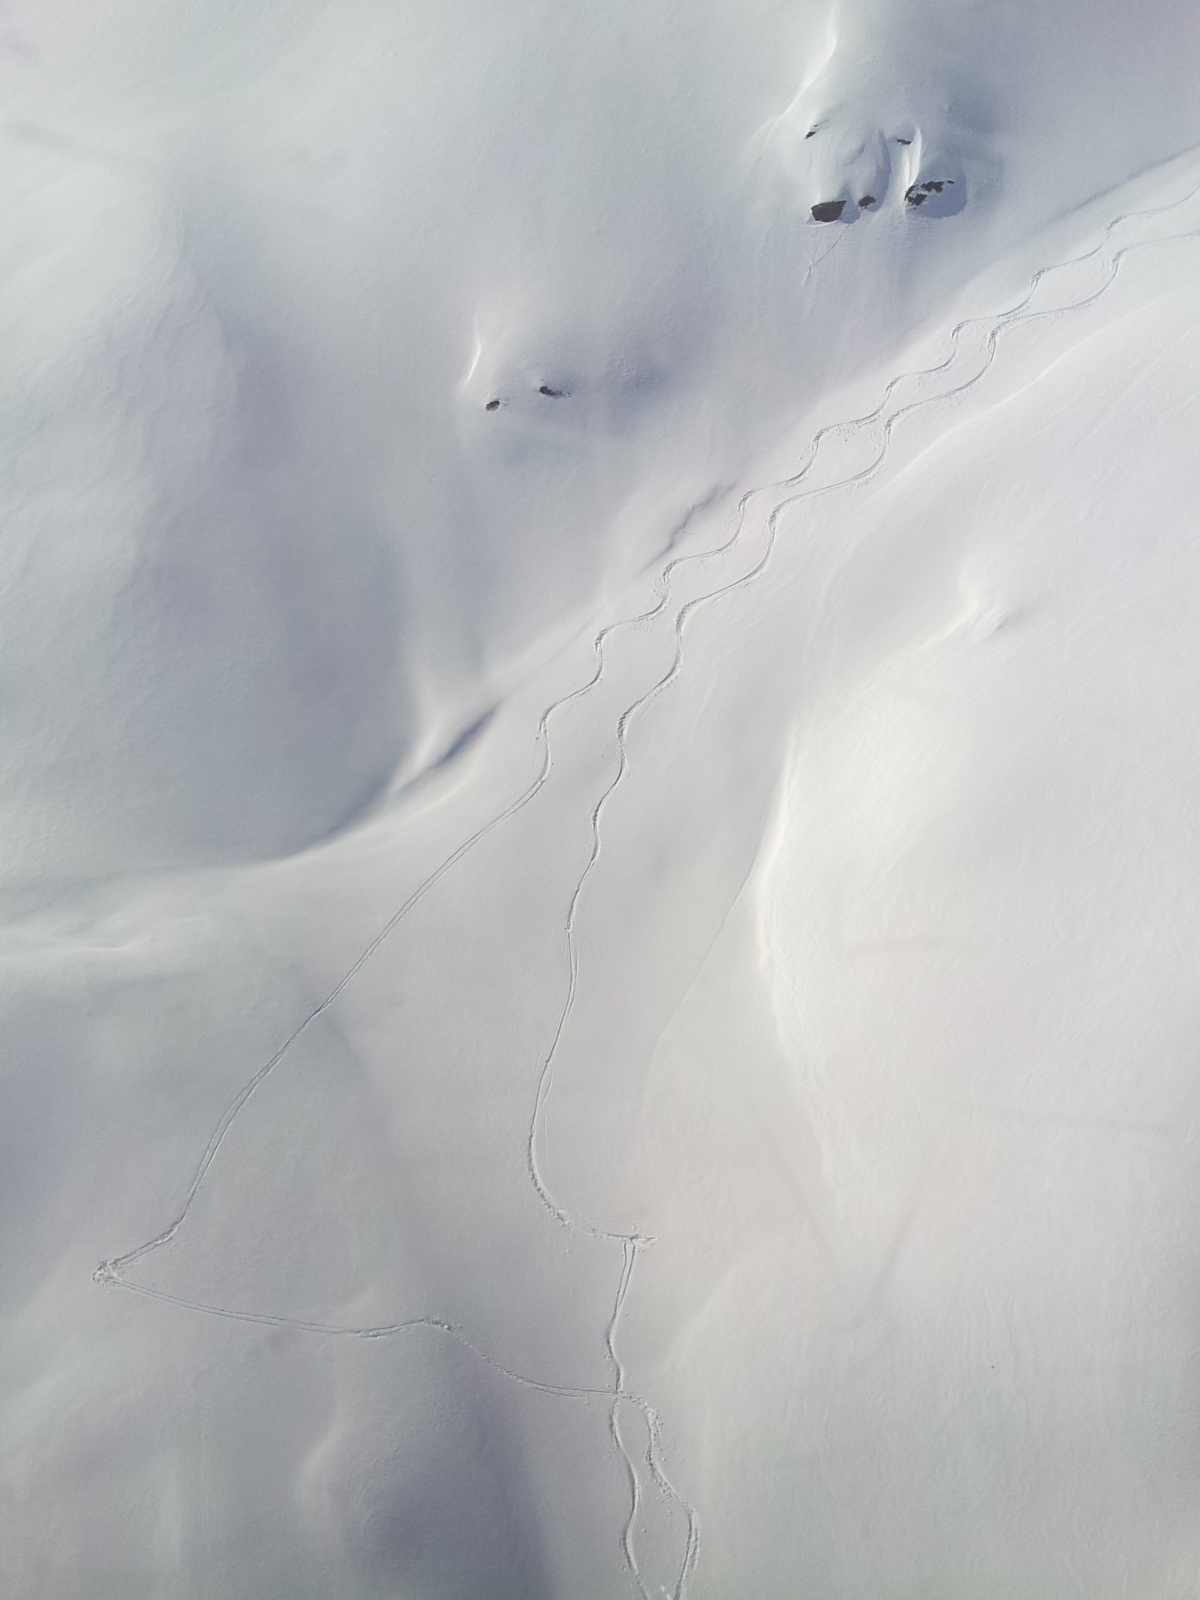 Ski trails across a billowy snowscape